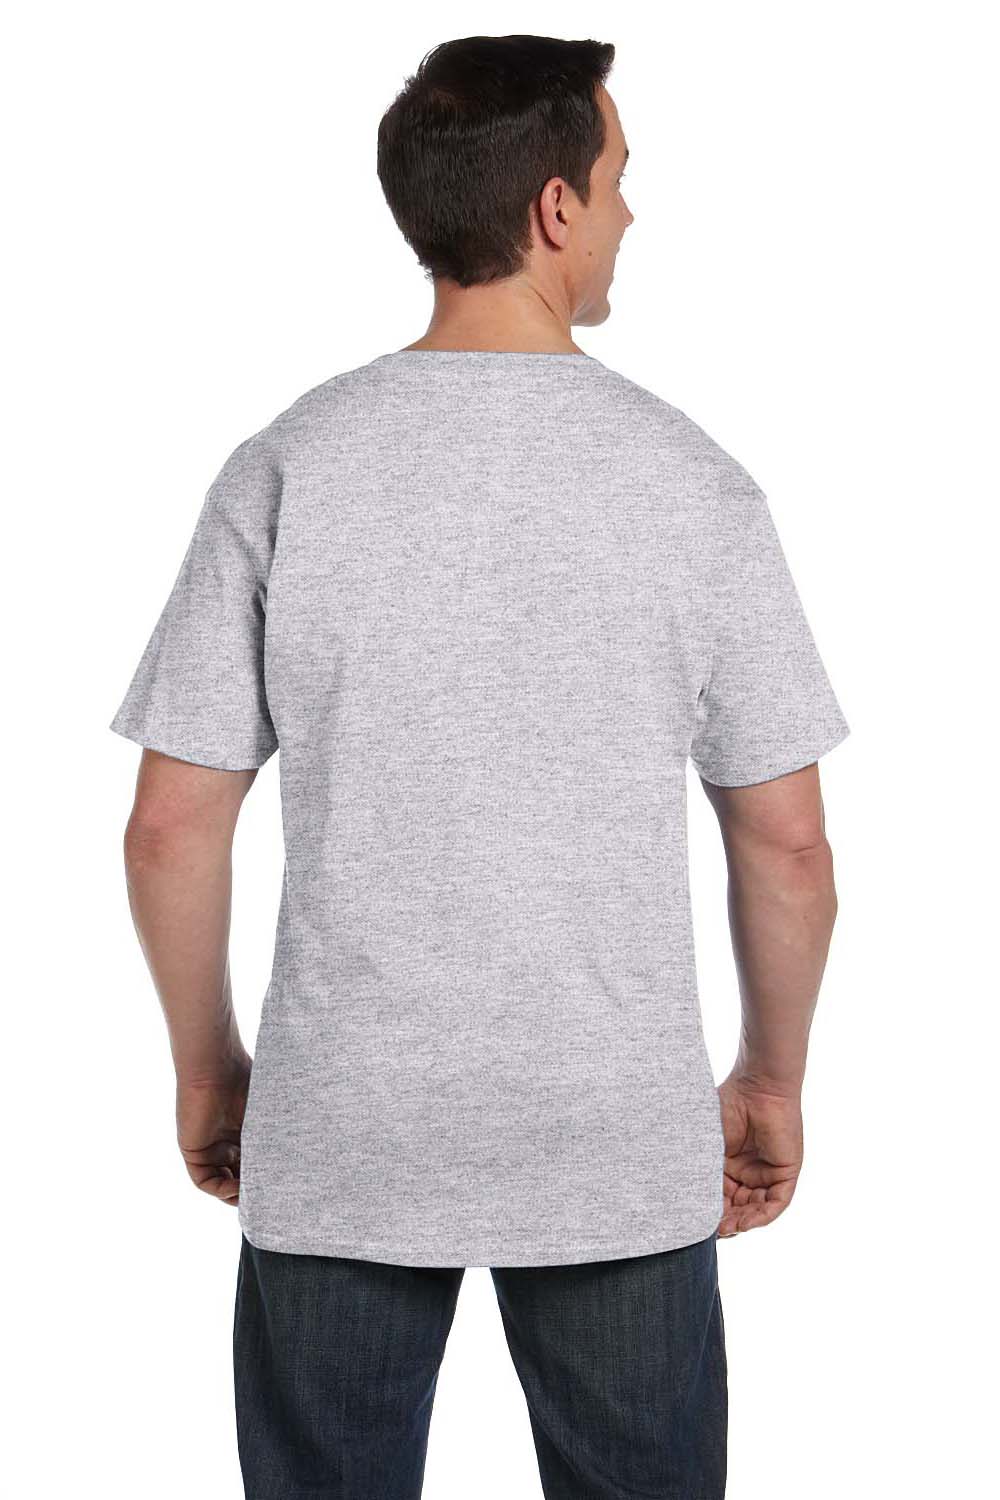 Hanes 5190P Mens Beefy-T Short Sleeve Crewneck T-Shirt w/ Pocket Ash Grey Back